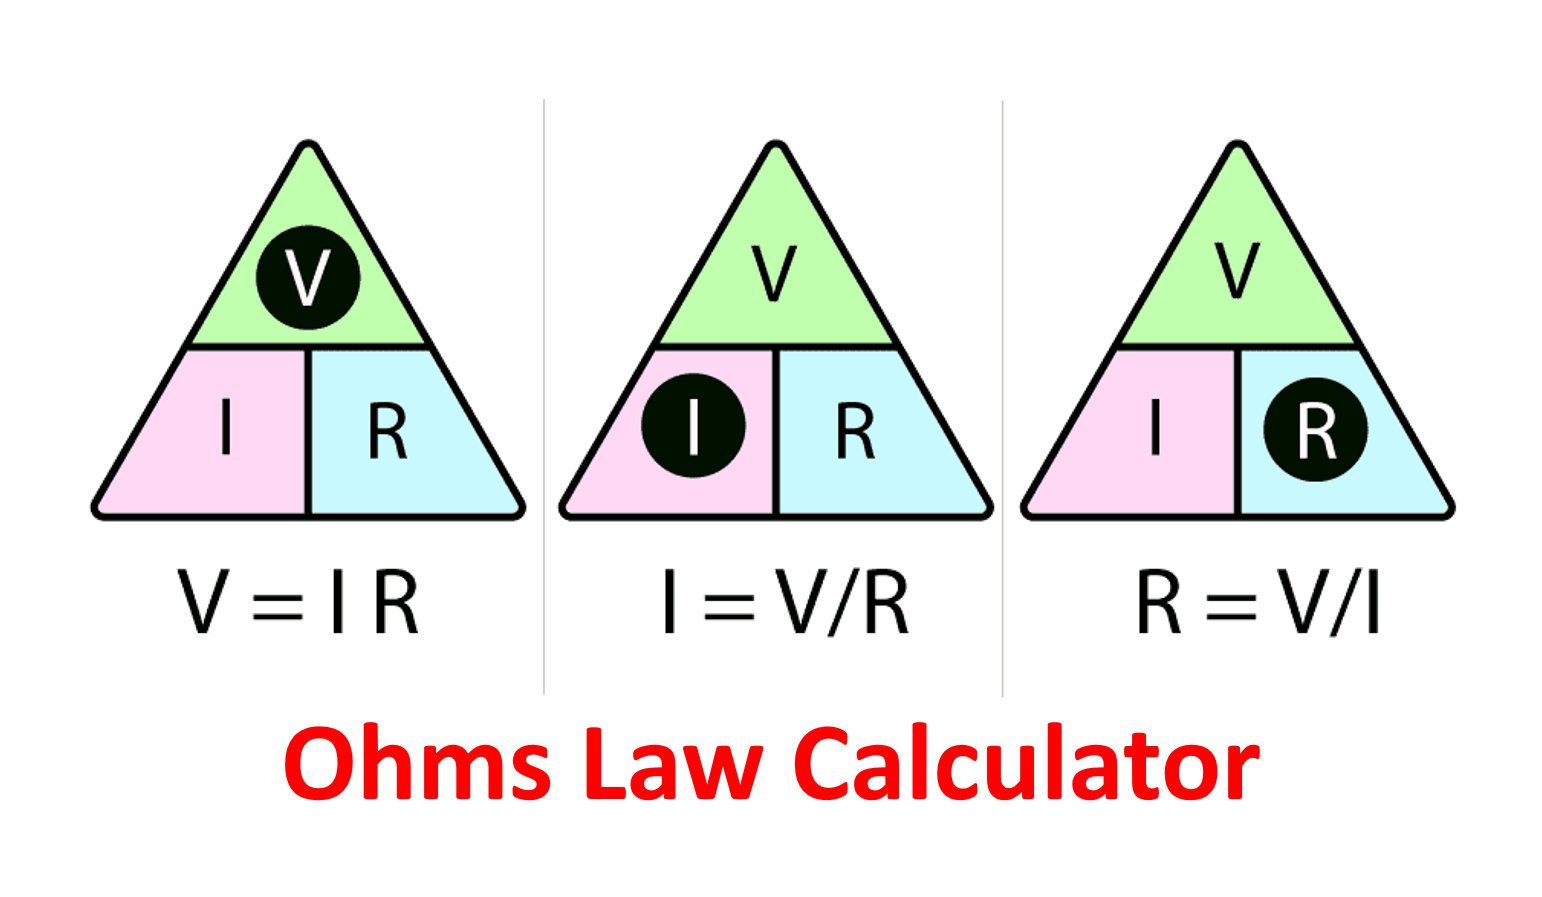 Ohms Law Calculator - ওহমস আইন ক্যালকুলেটর